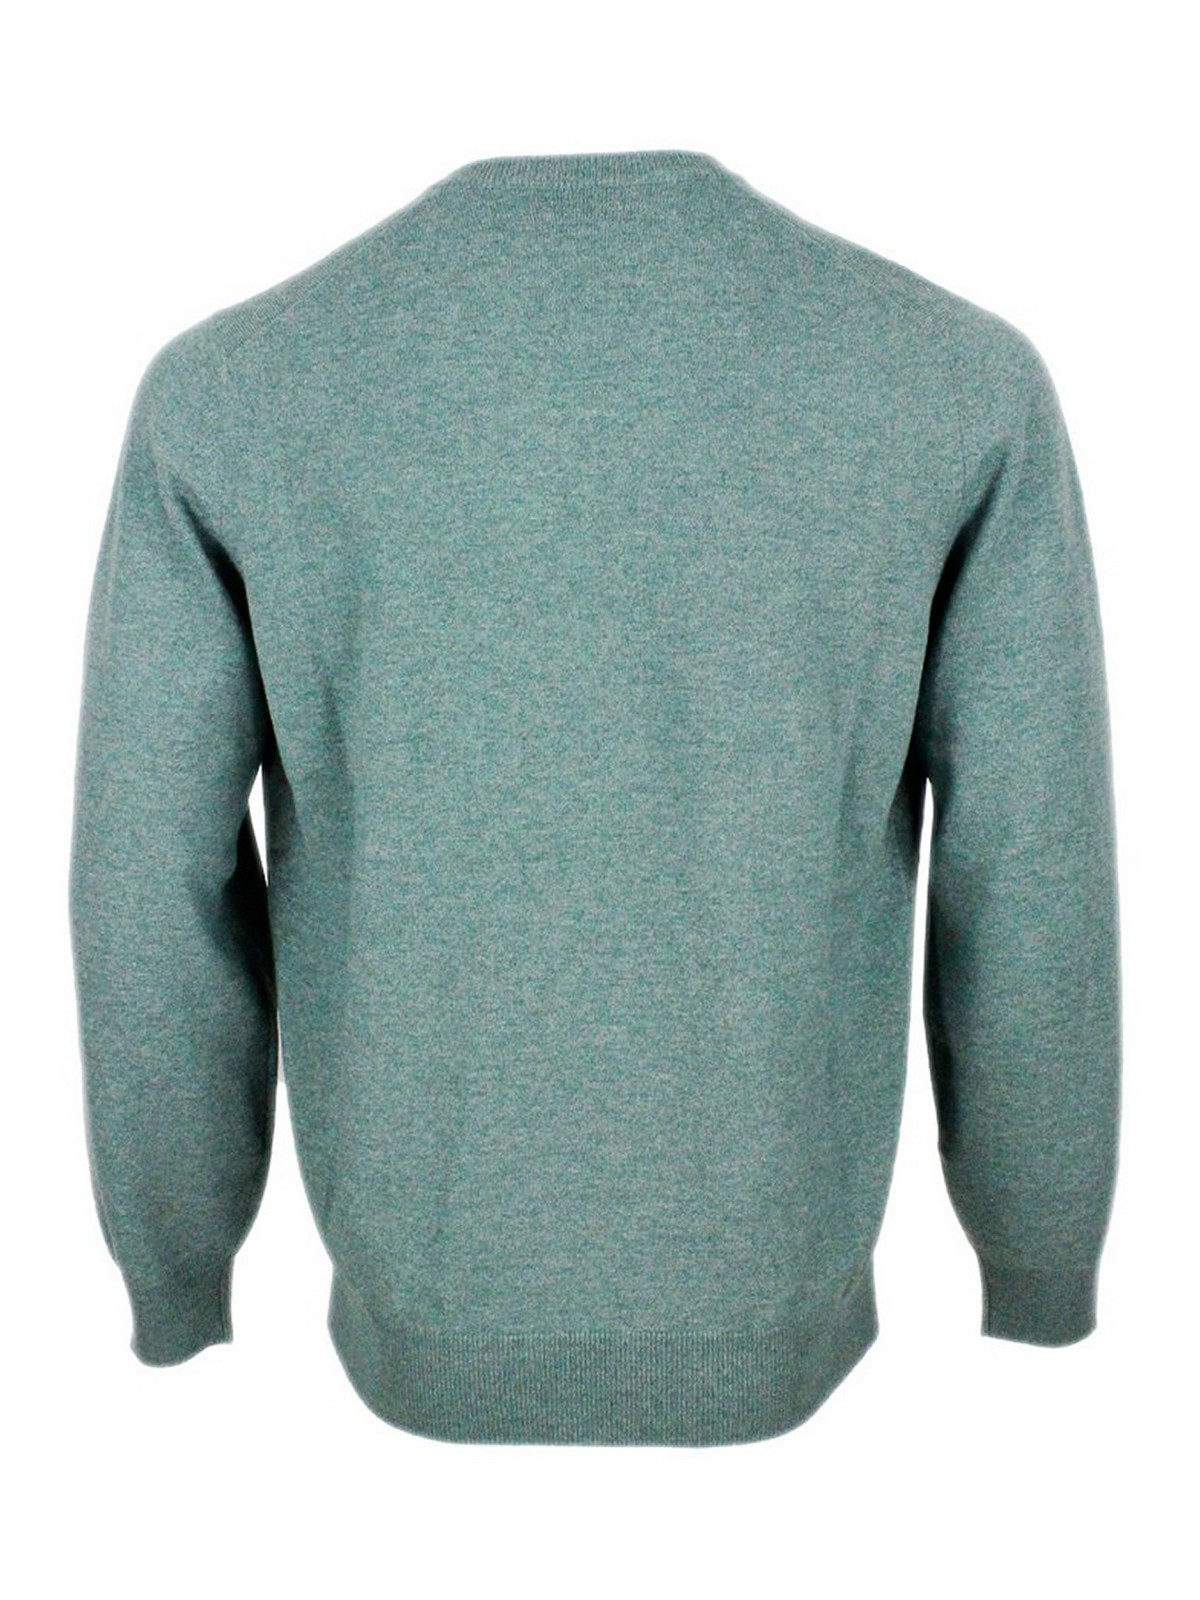 V necks Brunello Cucinelli - Cashmere V-neck sweater - M2200162CFO04